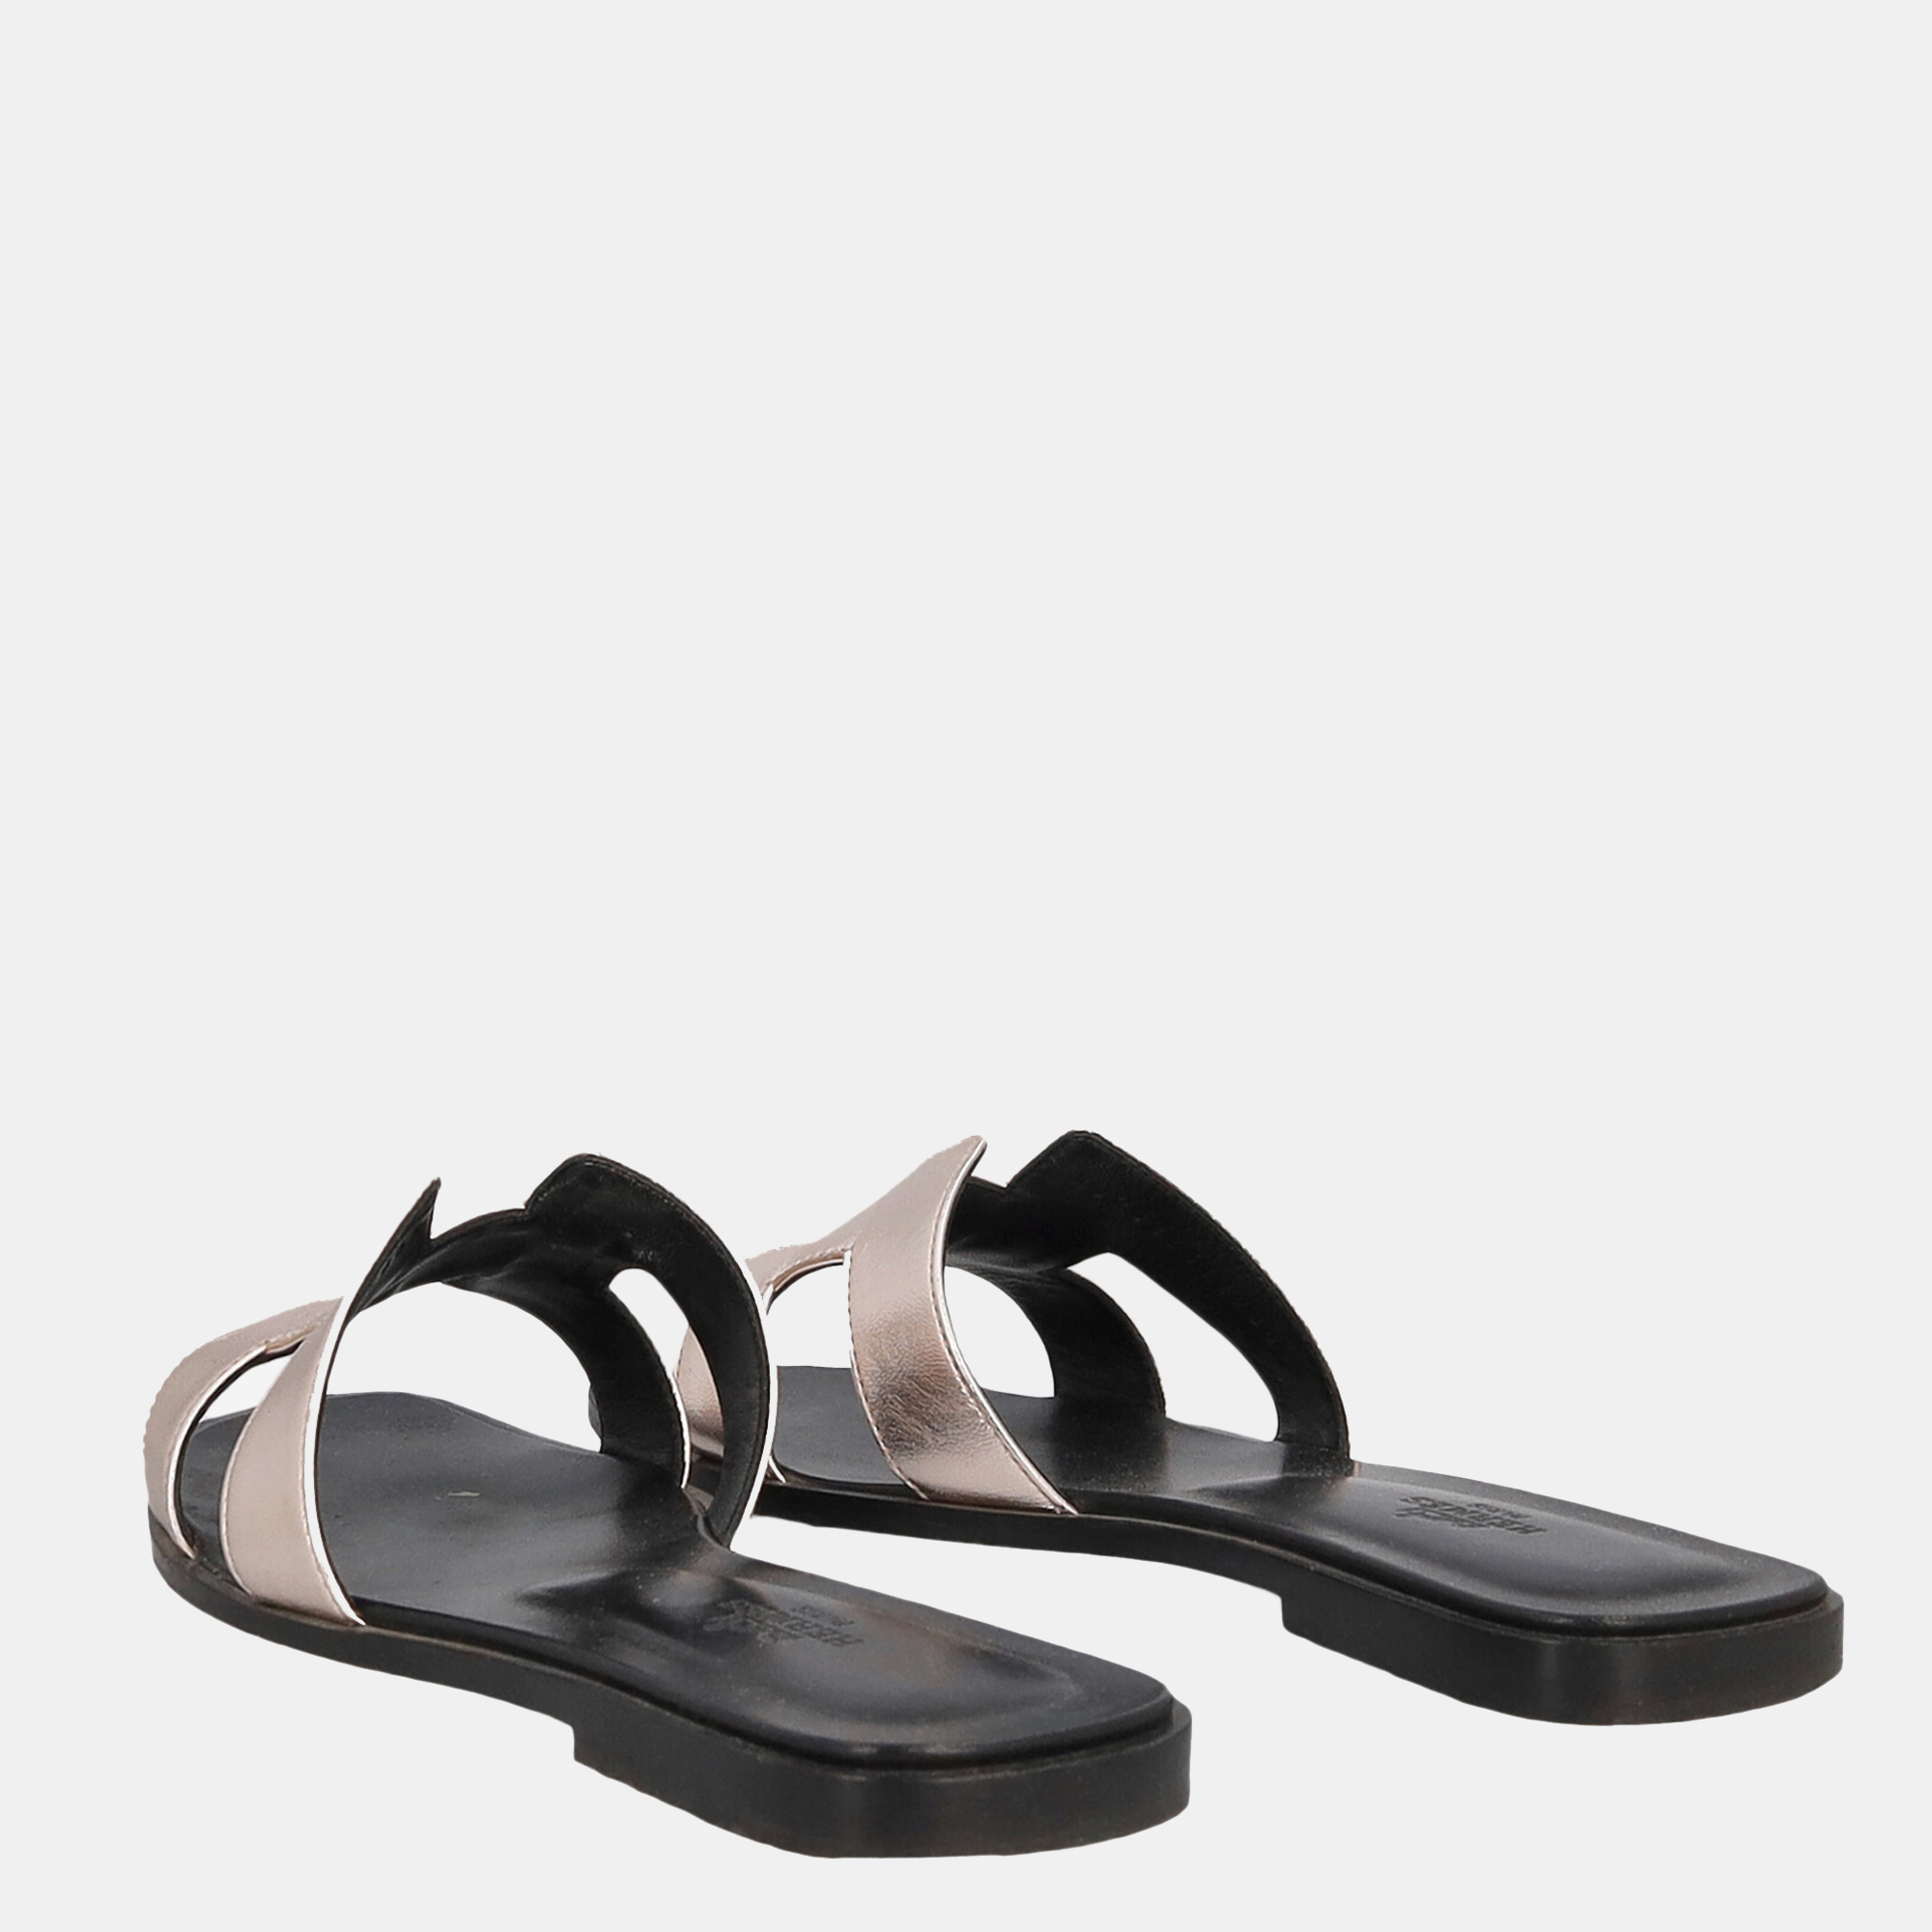 Hermès Women's Leather Slippers - Gold - EU 38.5